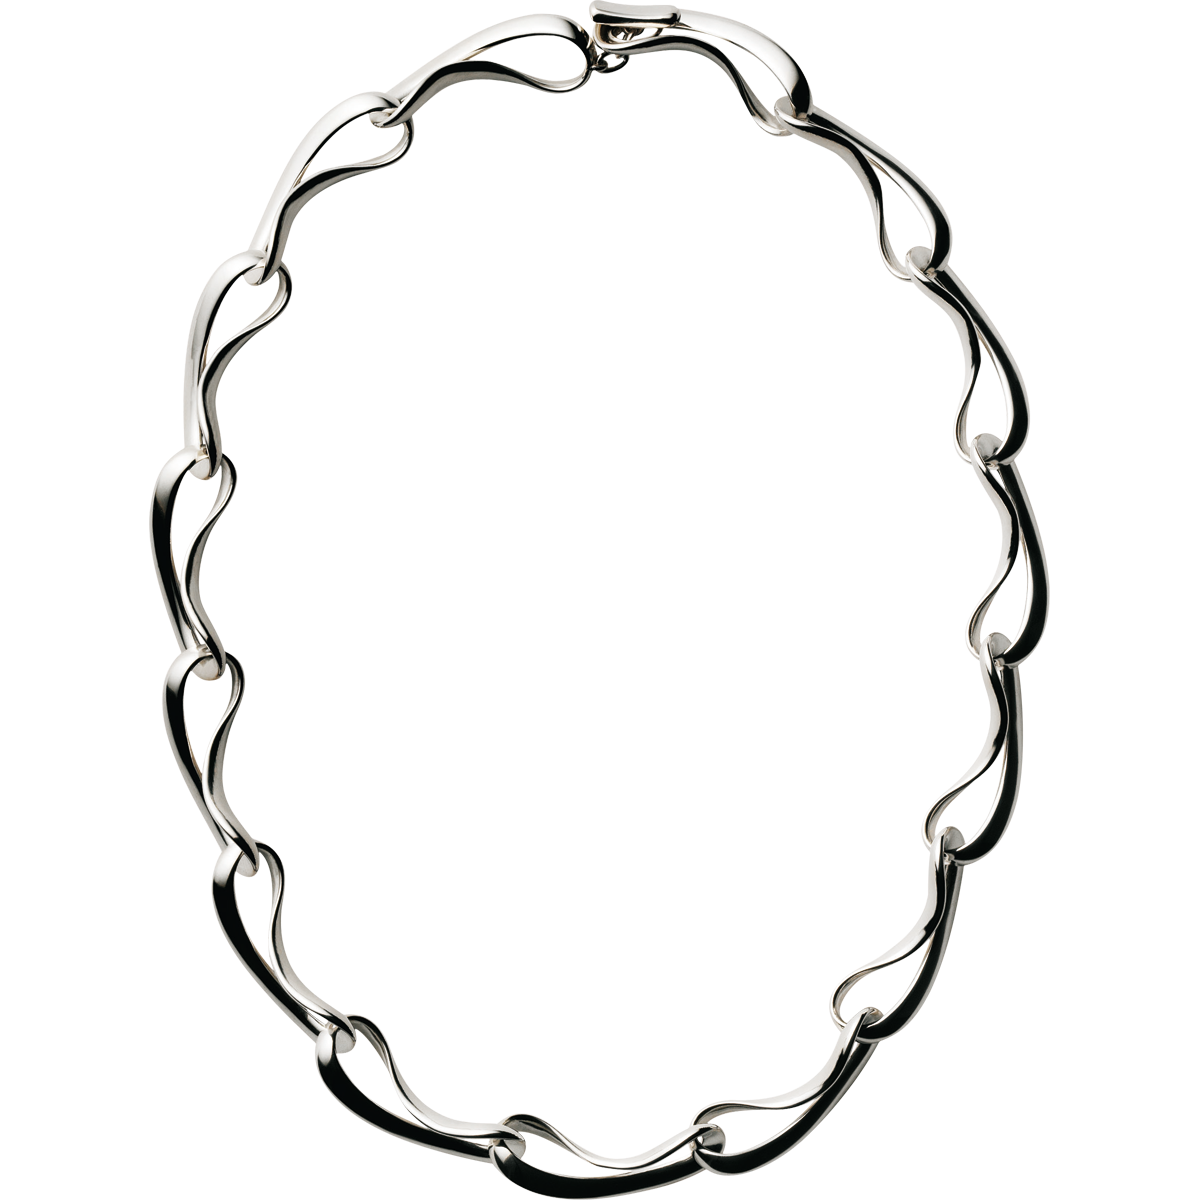 Infinity halskæde - sølv fra Georg Jensen